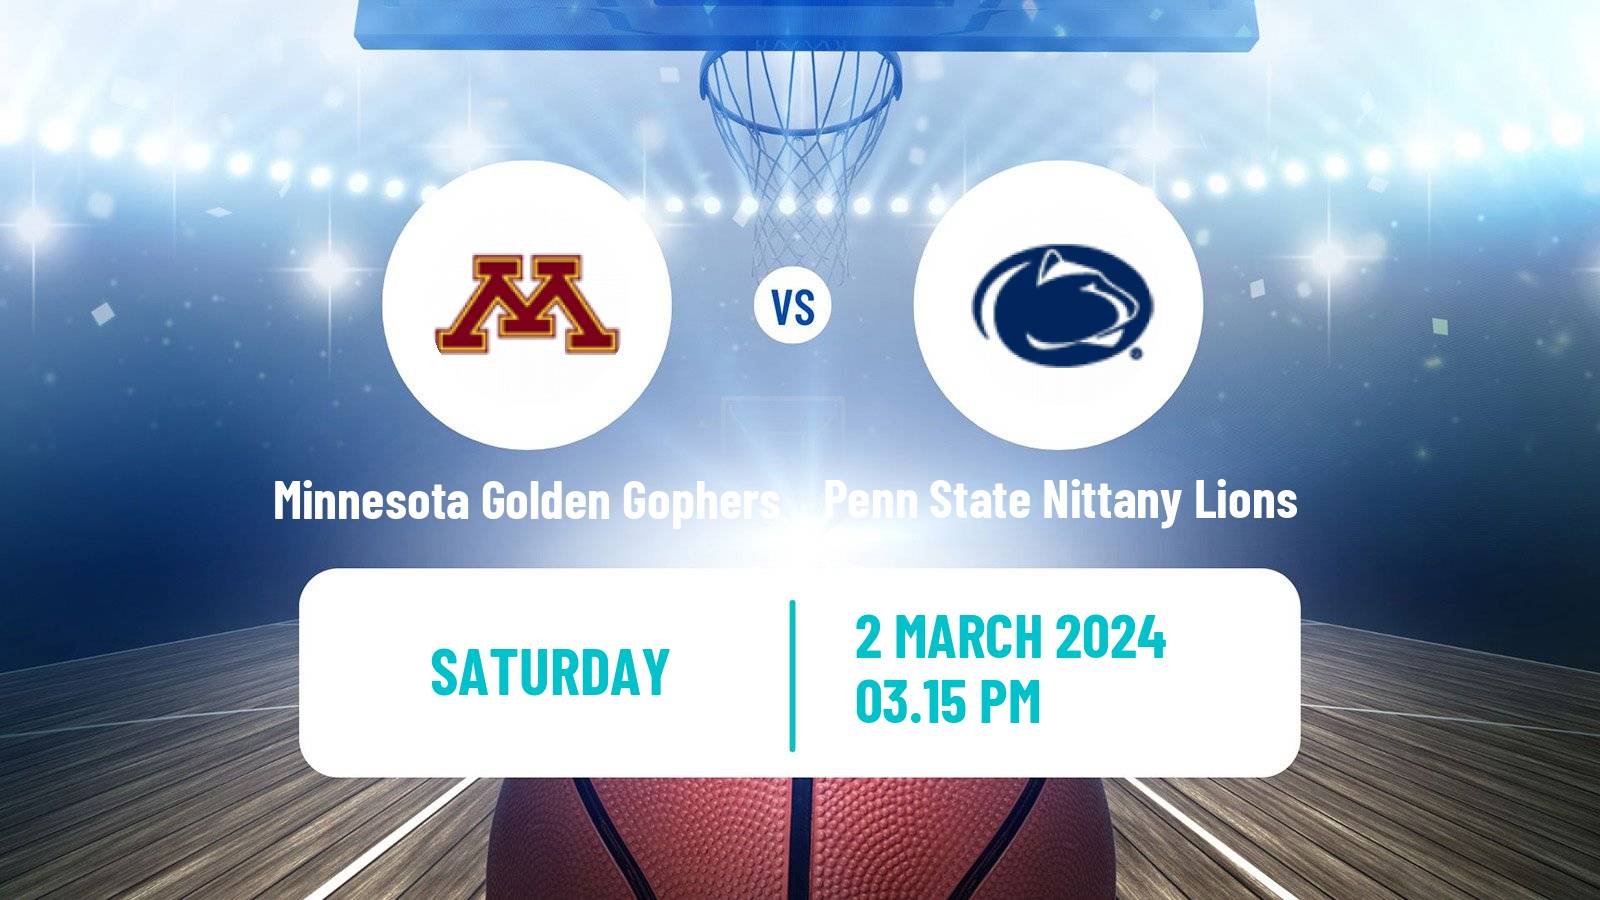 Basketball NCAA College Basketball Minnesota Golden Gophers - Penn State Nittany Lions